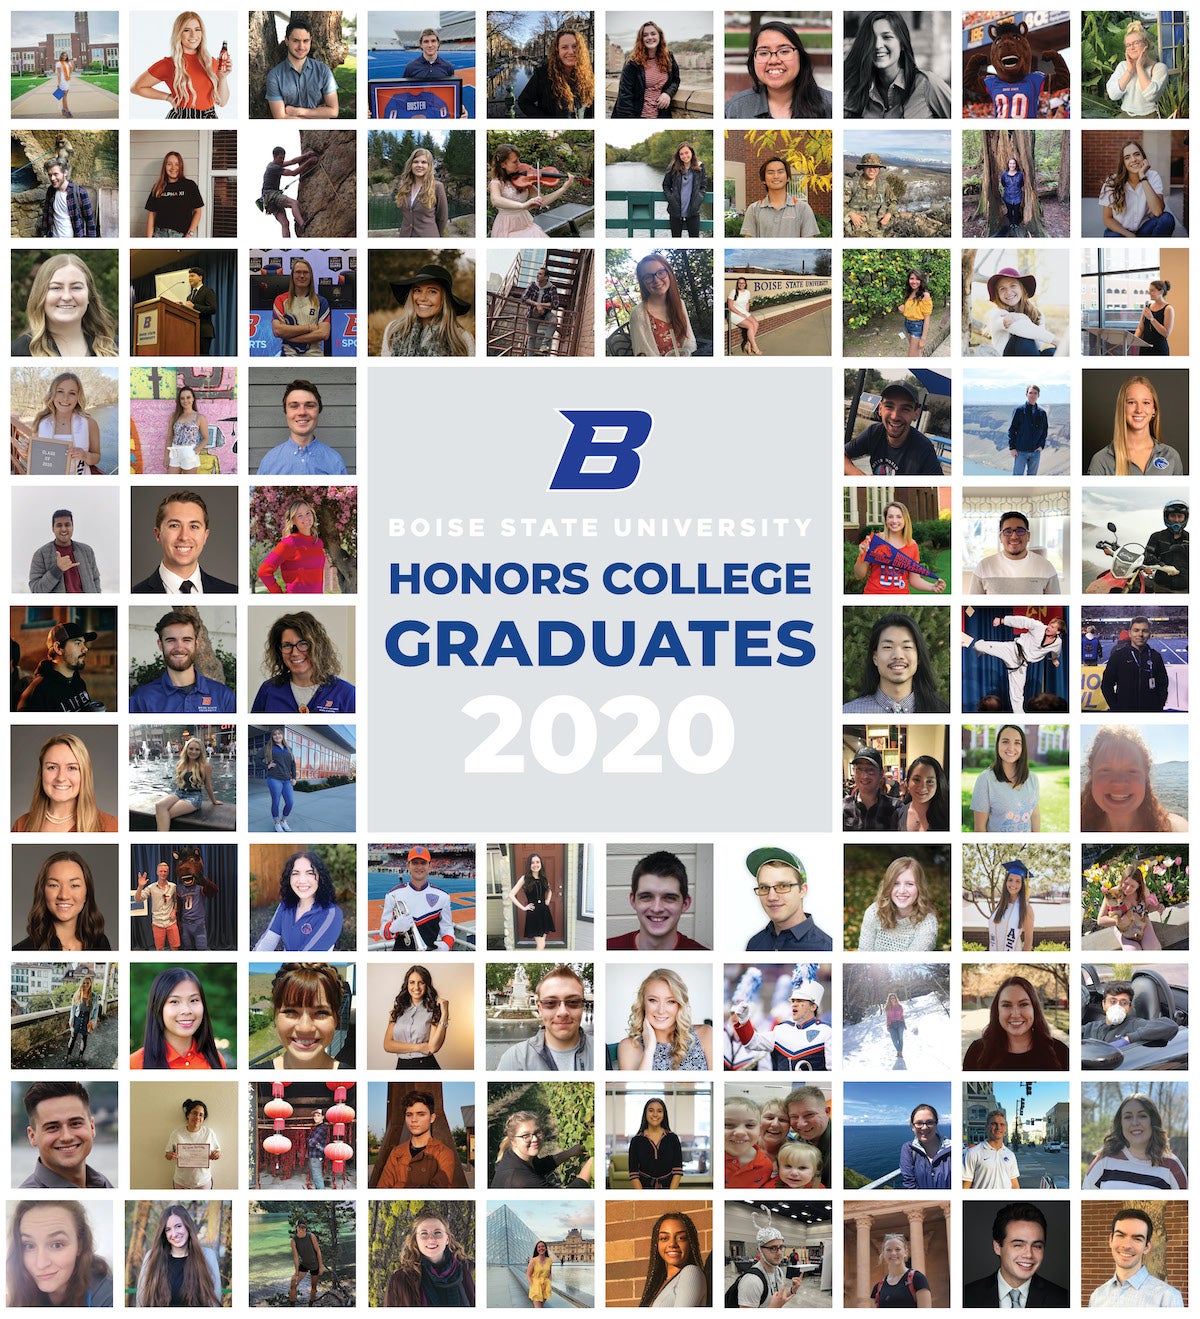 2020 Honors College Graduates, collage